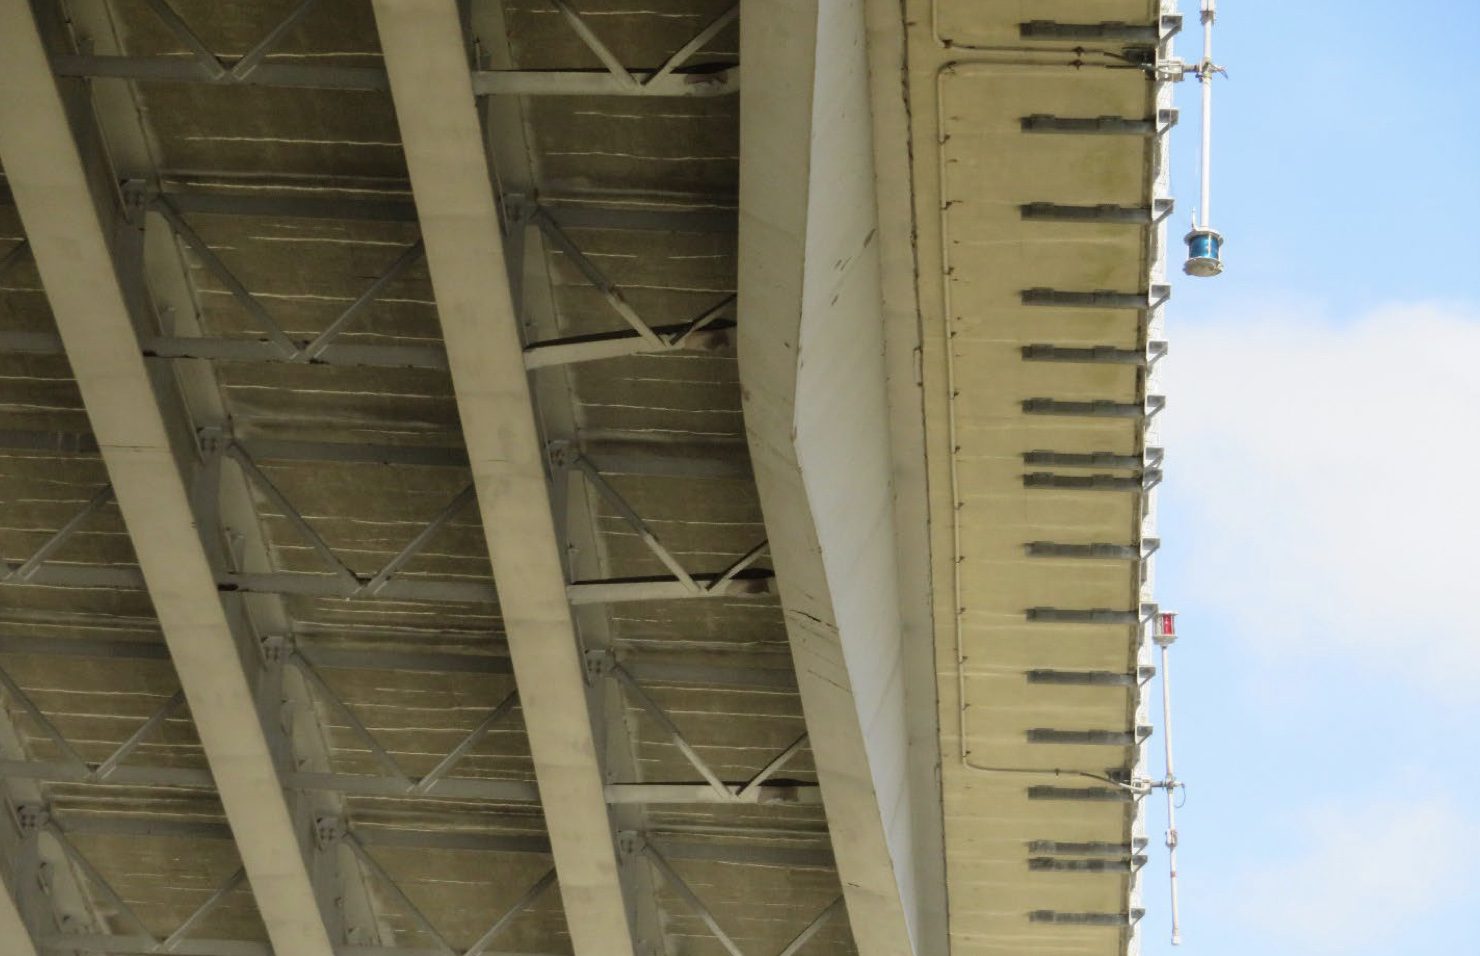 Incorrect Crane Height Estimate Causes $2 Million in Damages to Bridge